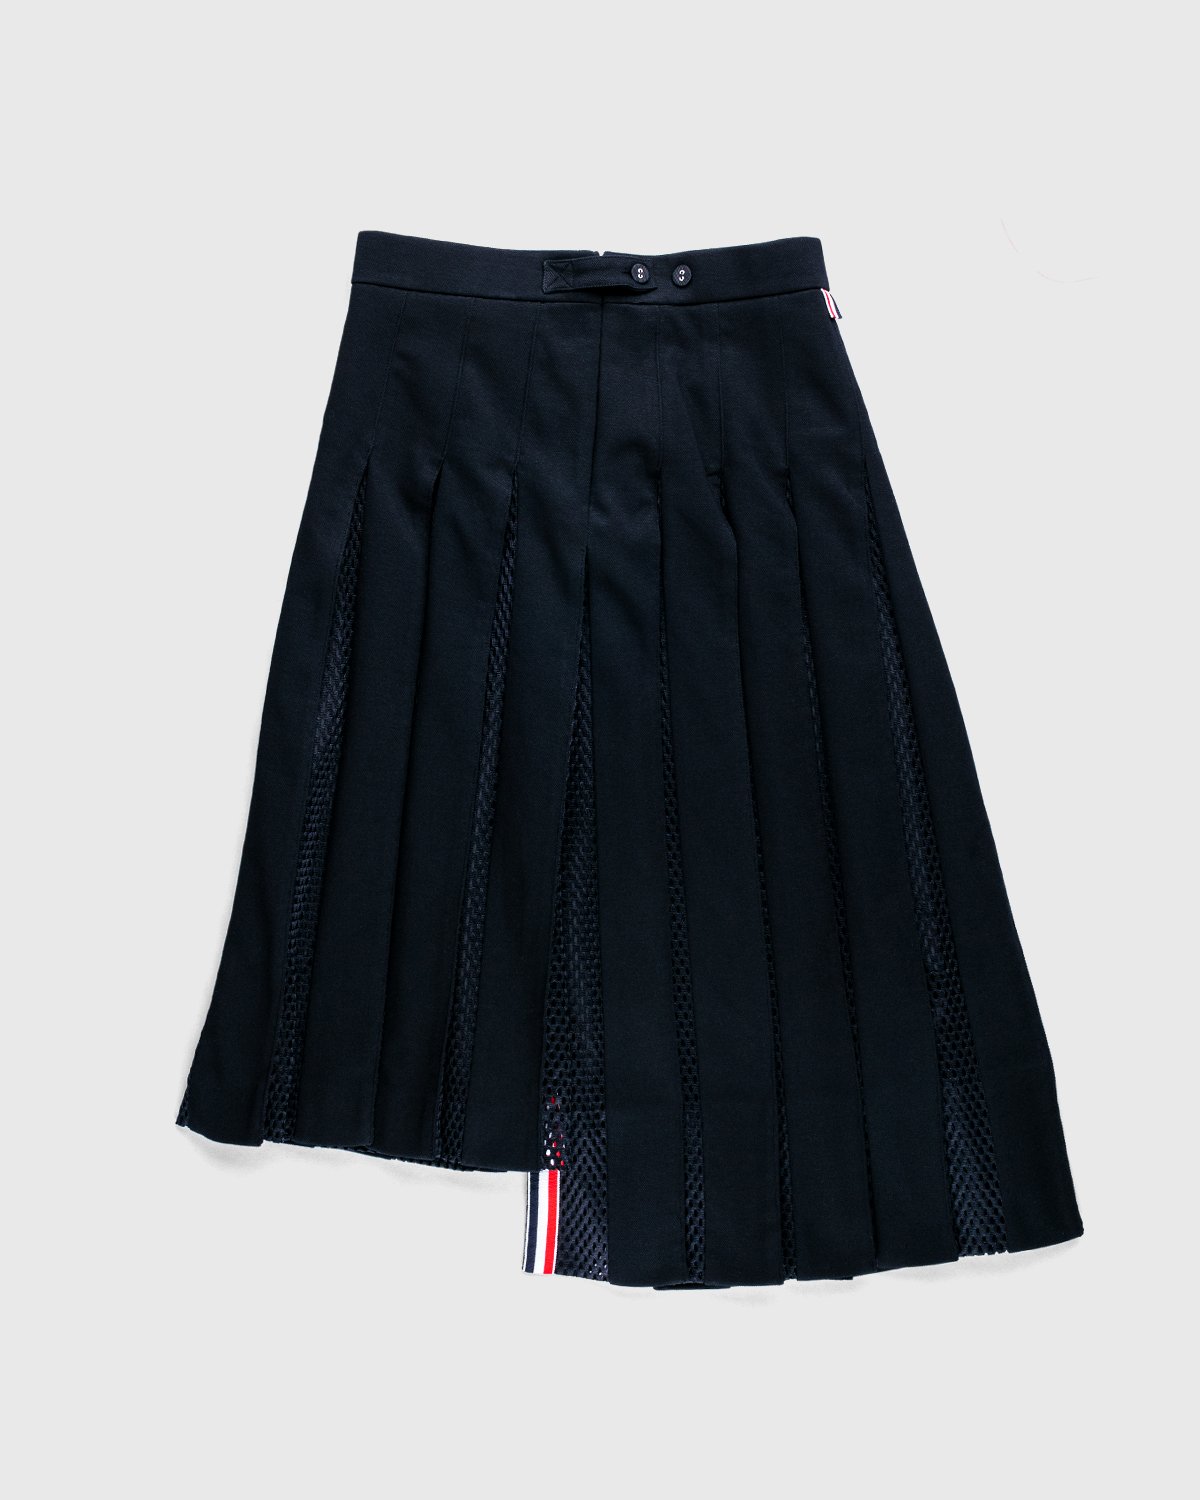 Thom Browne x Highsnobiety - Men's Pleated Mesh Skirt Black - Clothing - Black - Image 3